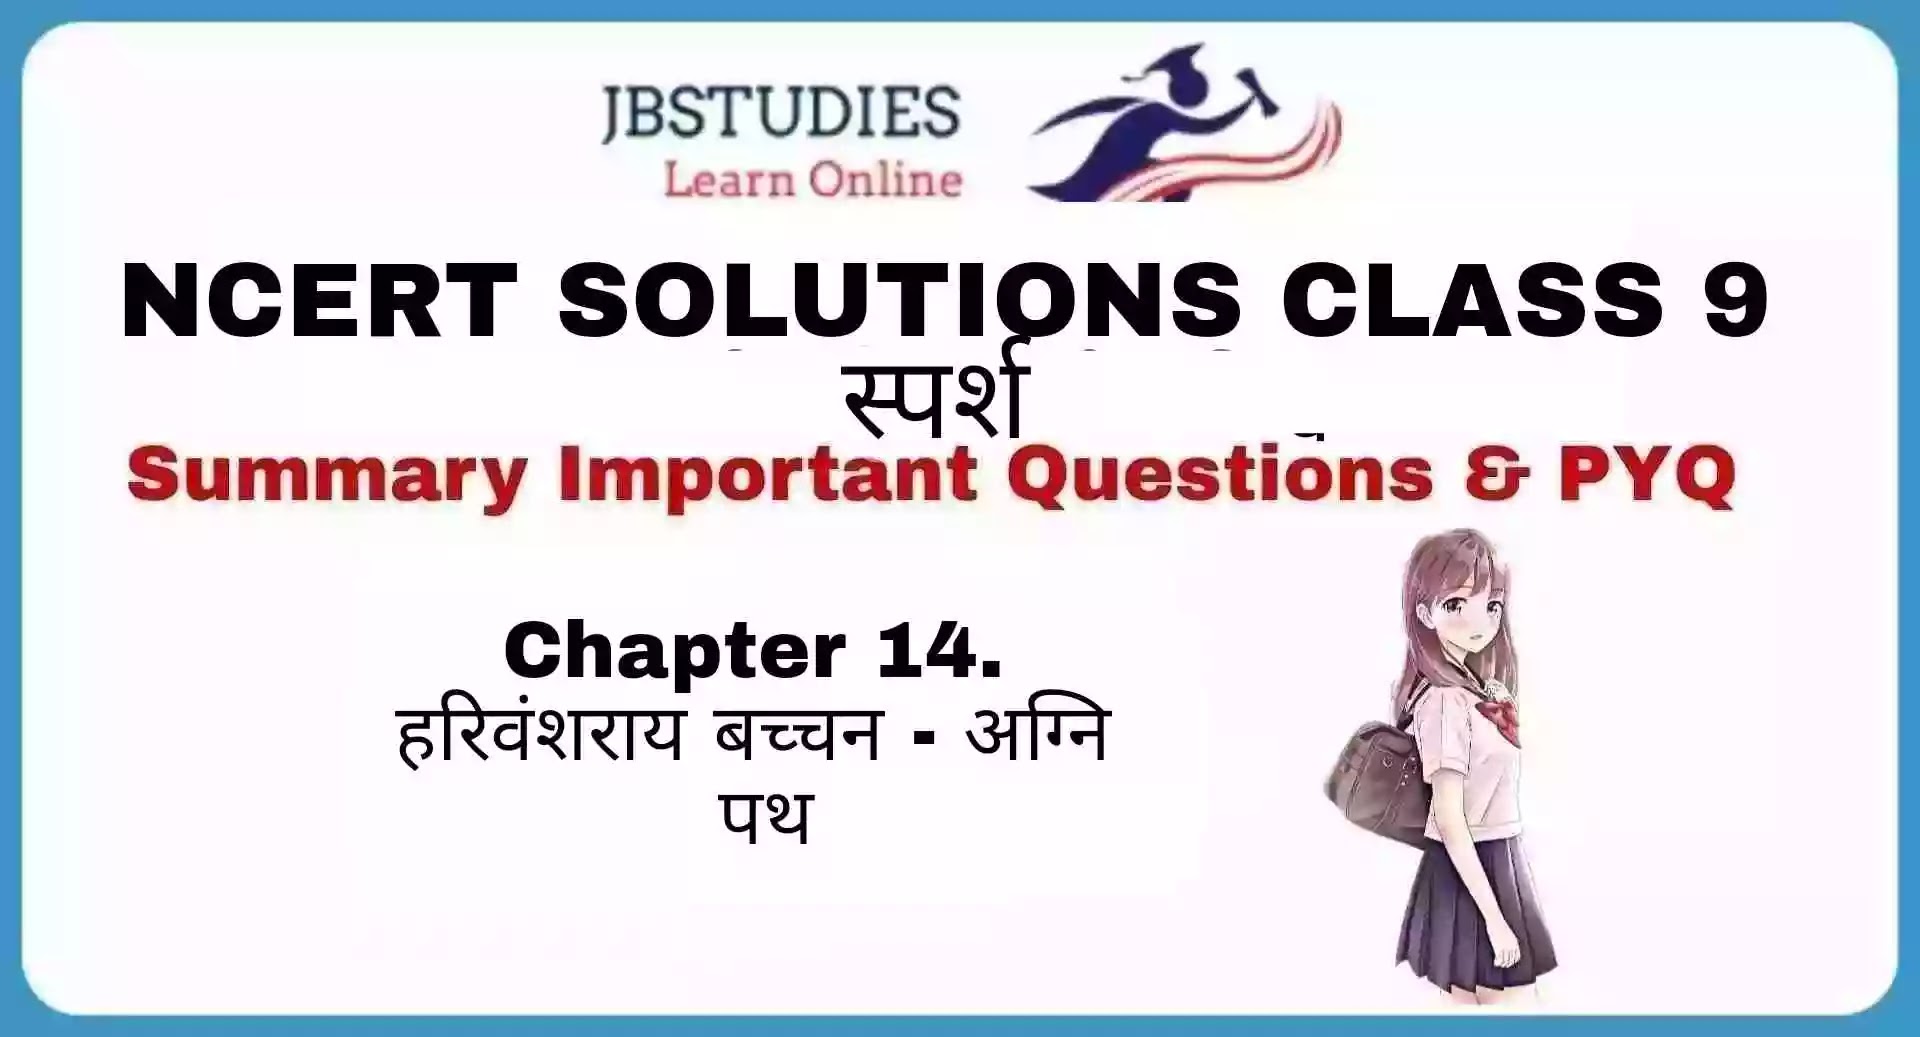 Solutions Class 9 स्पर्श Chapter-14 (हरिवंशराय बच्चन - अग्नि पथ)